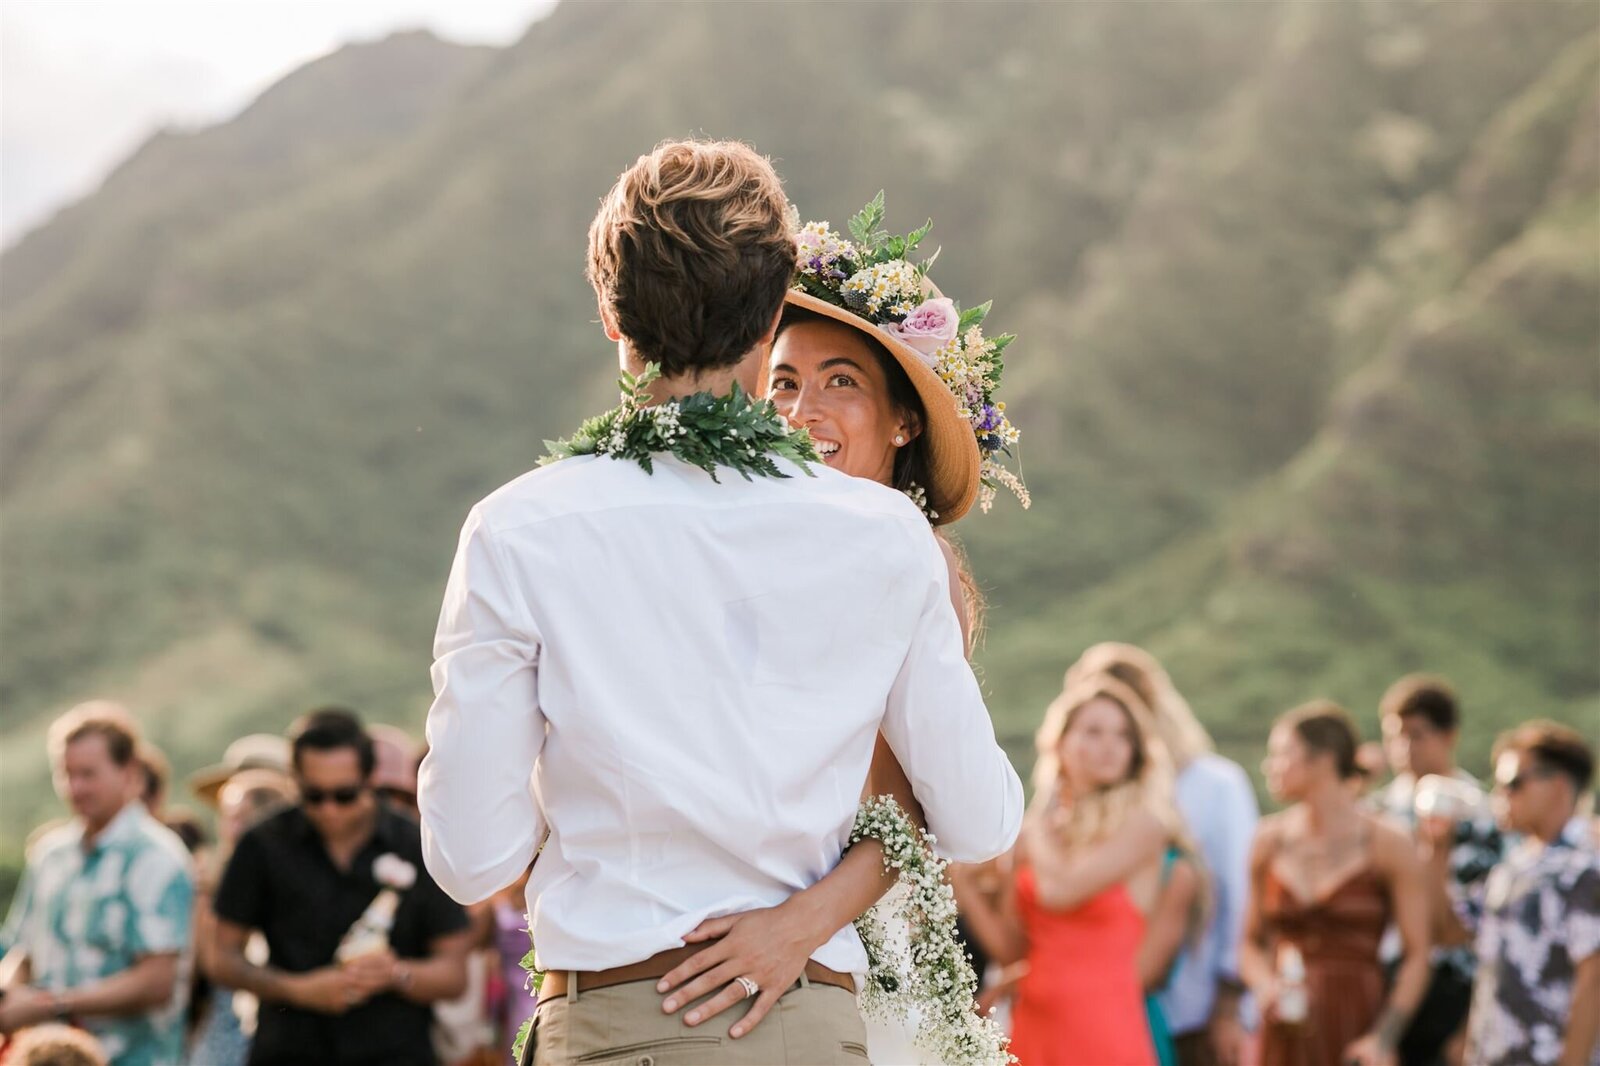 Kualoa_Ranch_Oahu_Hawaii_Wedding-Valorie_Darling_Photography-VKD_9700_websize